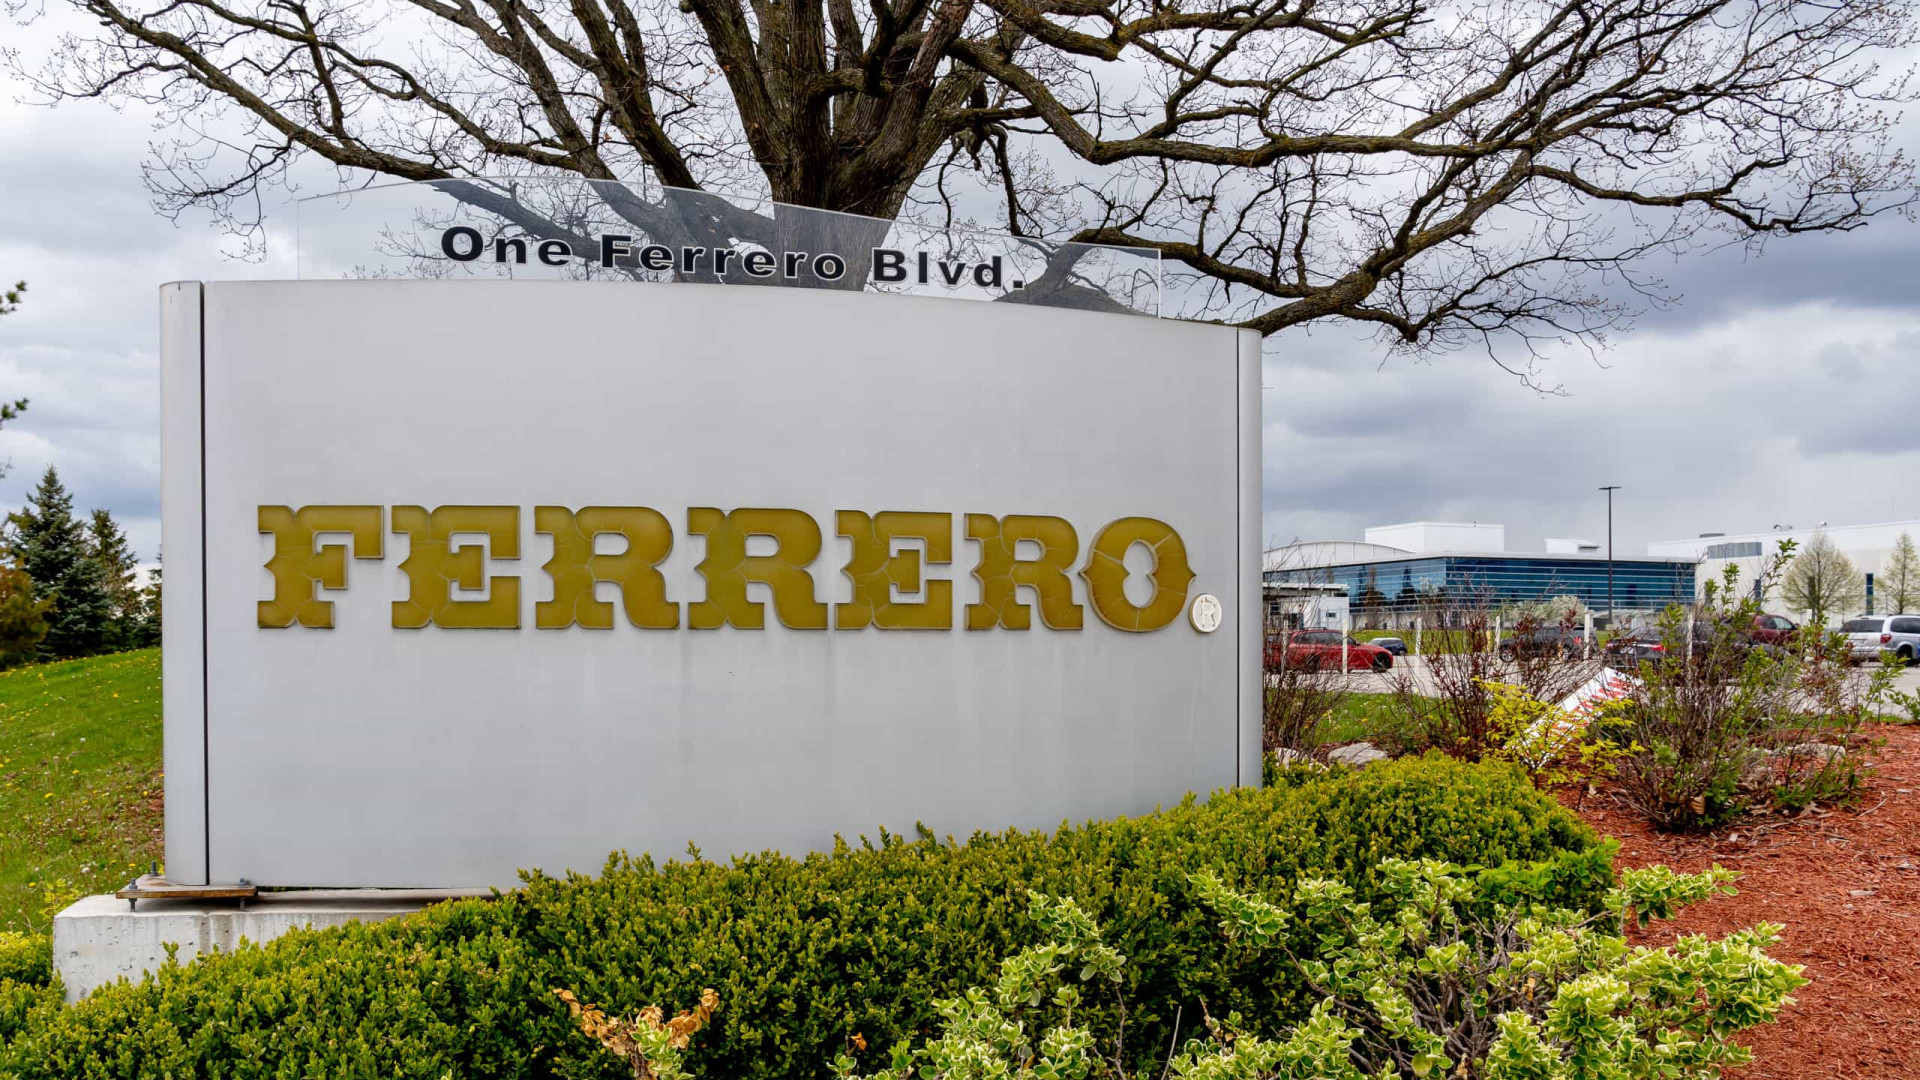 Anvisa identifica novos lotes de chocolate da Ferrero com risco de salmonella